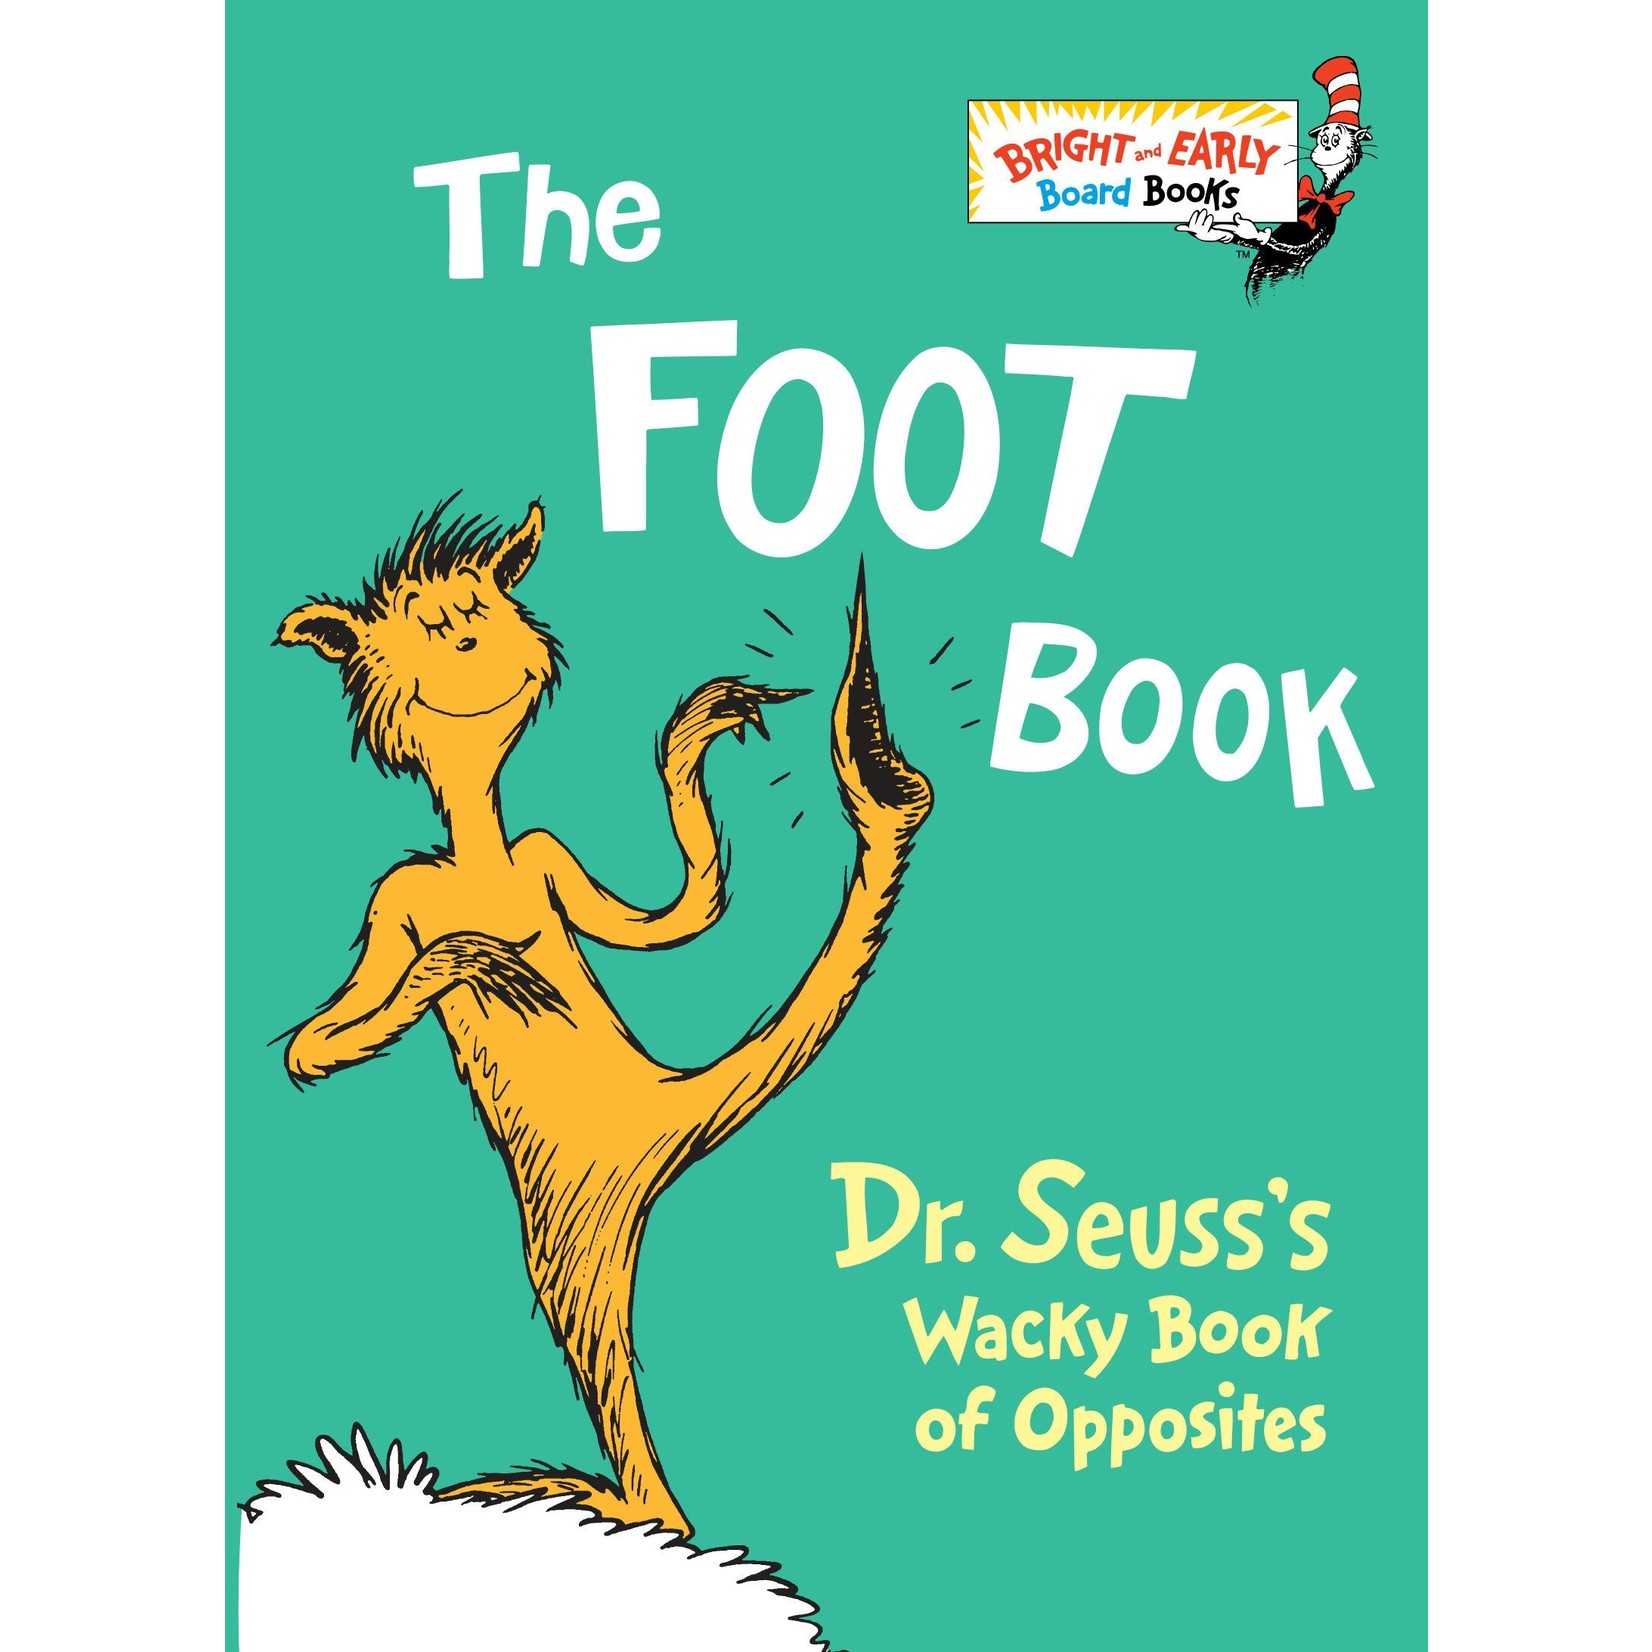 Dr. Seuss The Foot Book